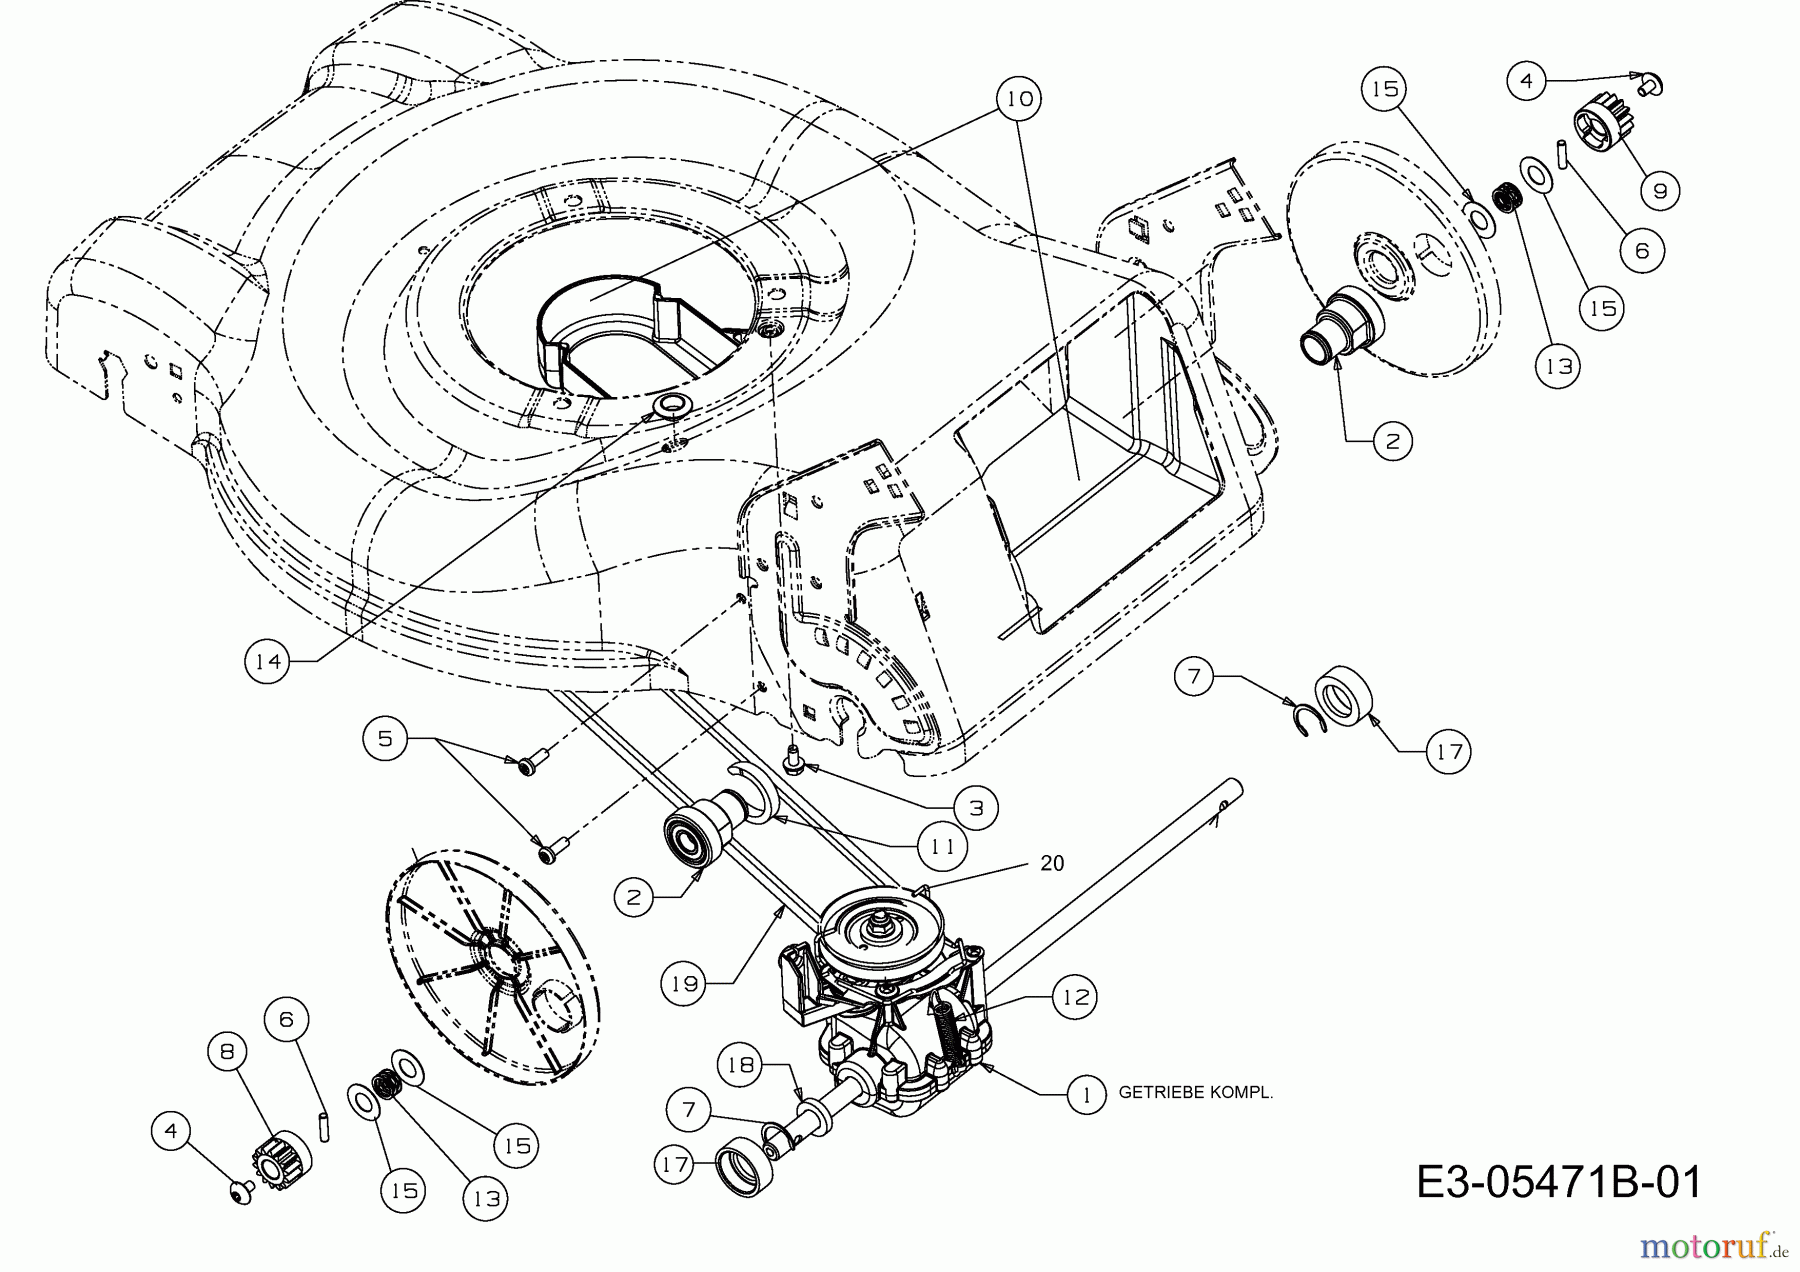  Plantiflor Motormäher mit Antrieb BMR 46 Comfort 12A-J55C601  (2013) Getriebe